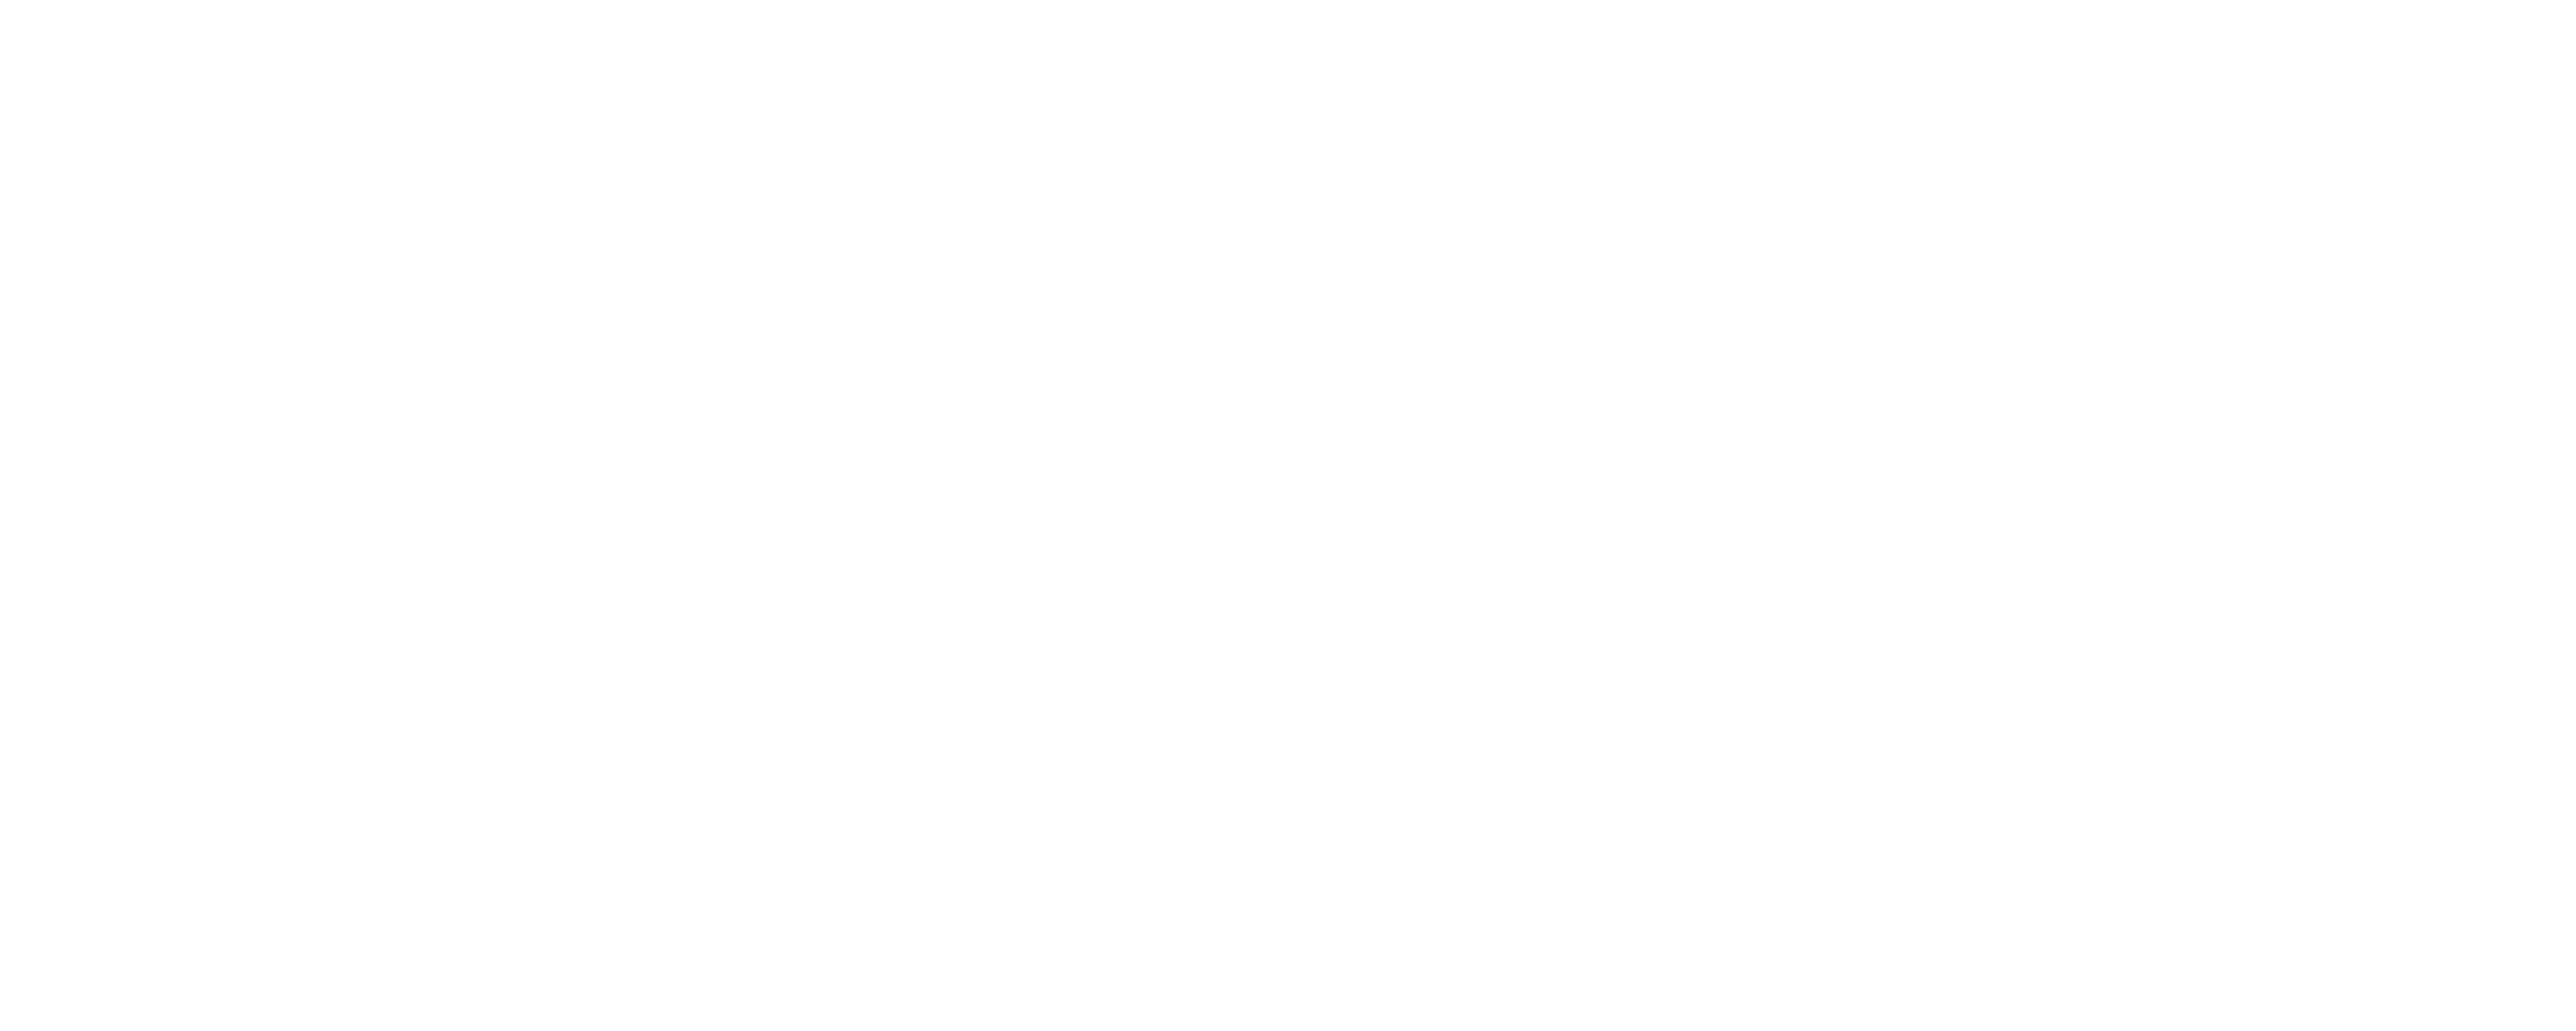 Tier